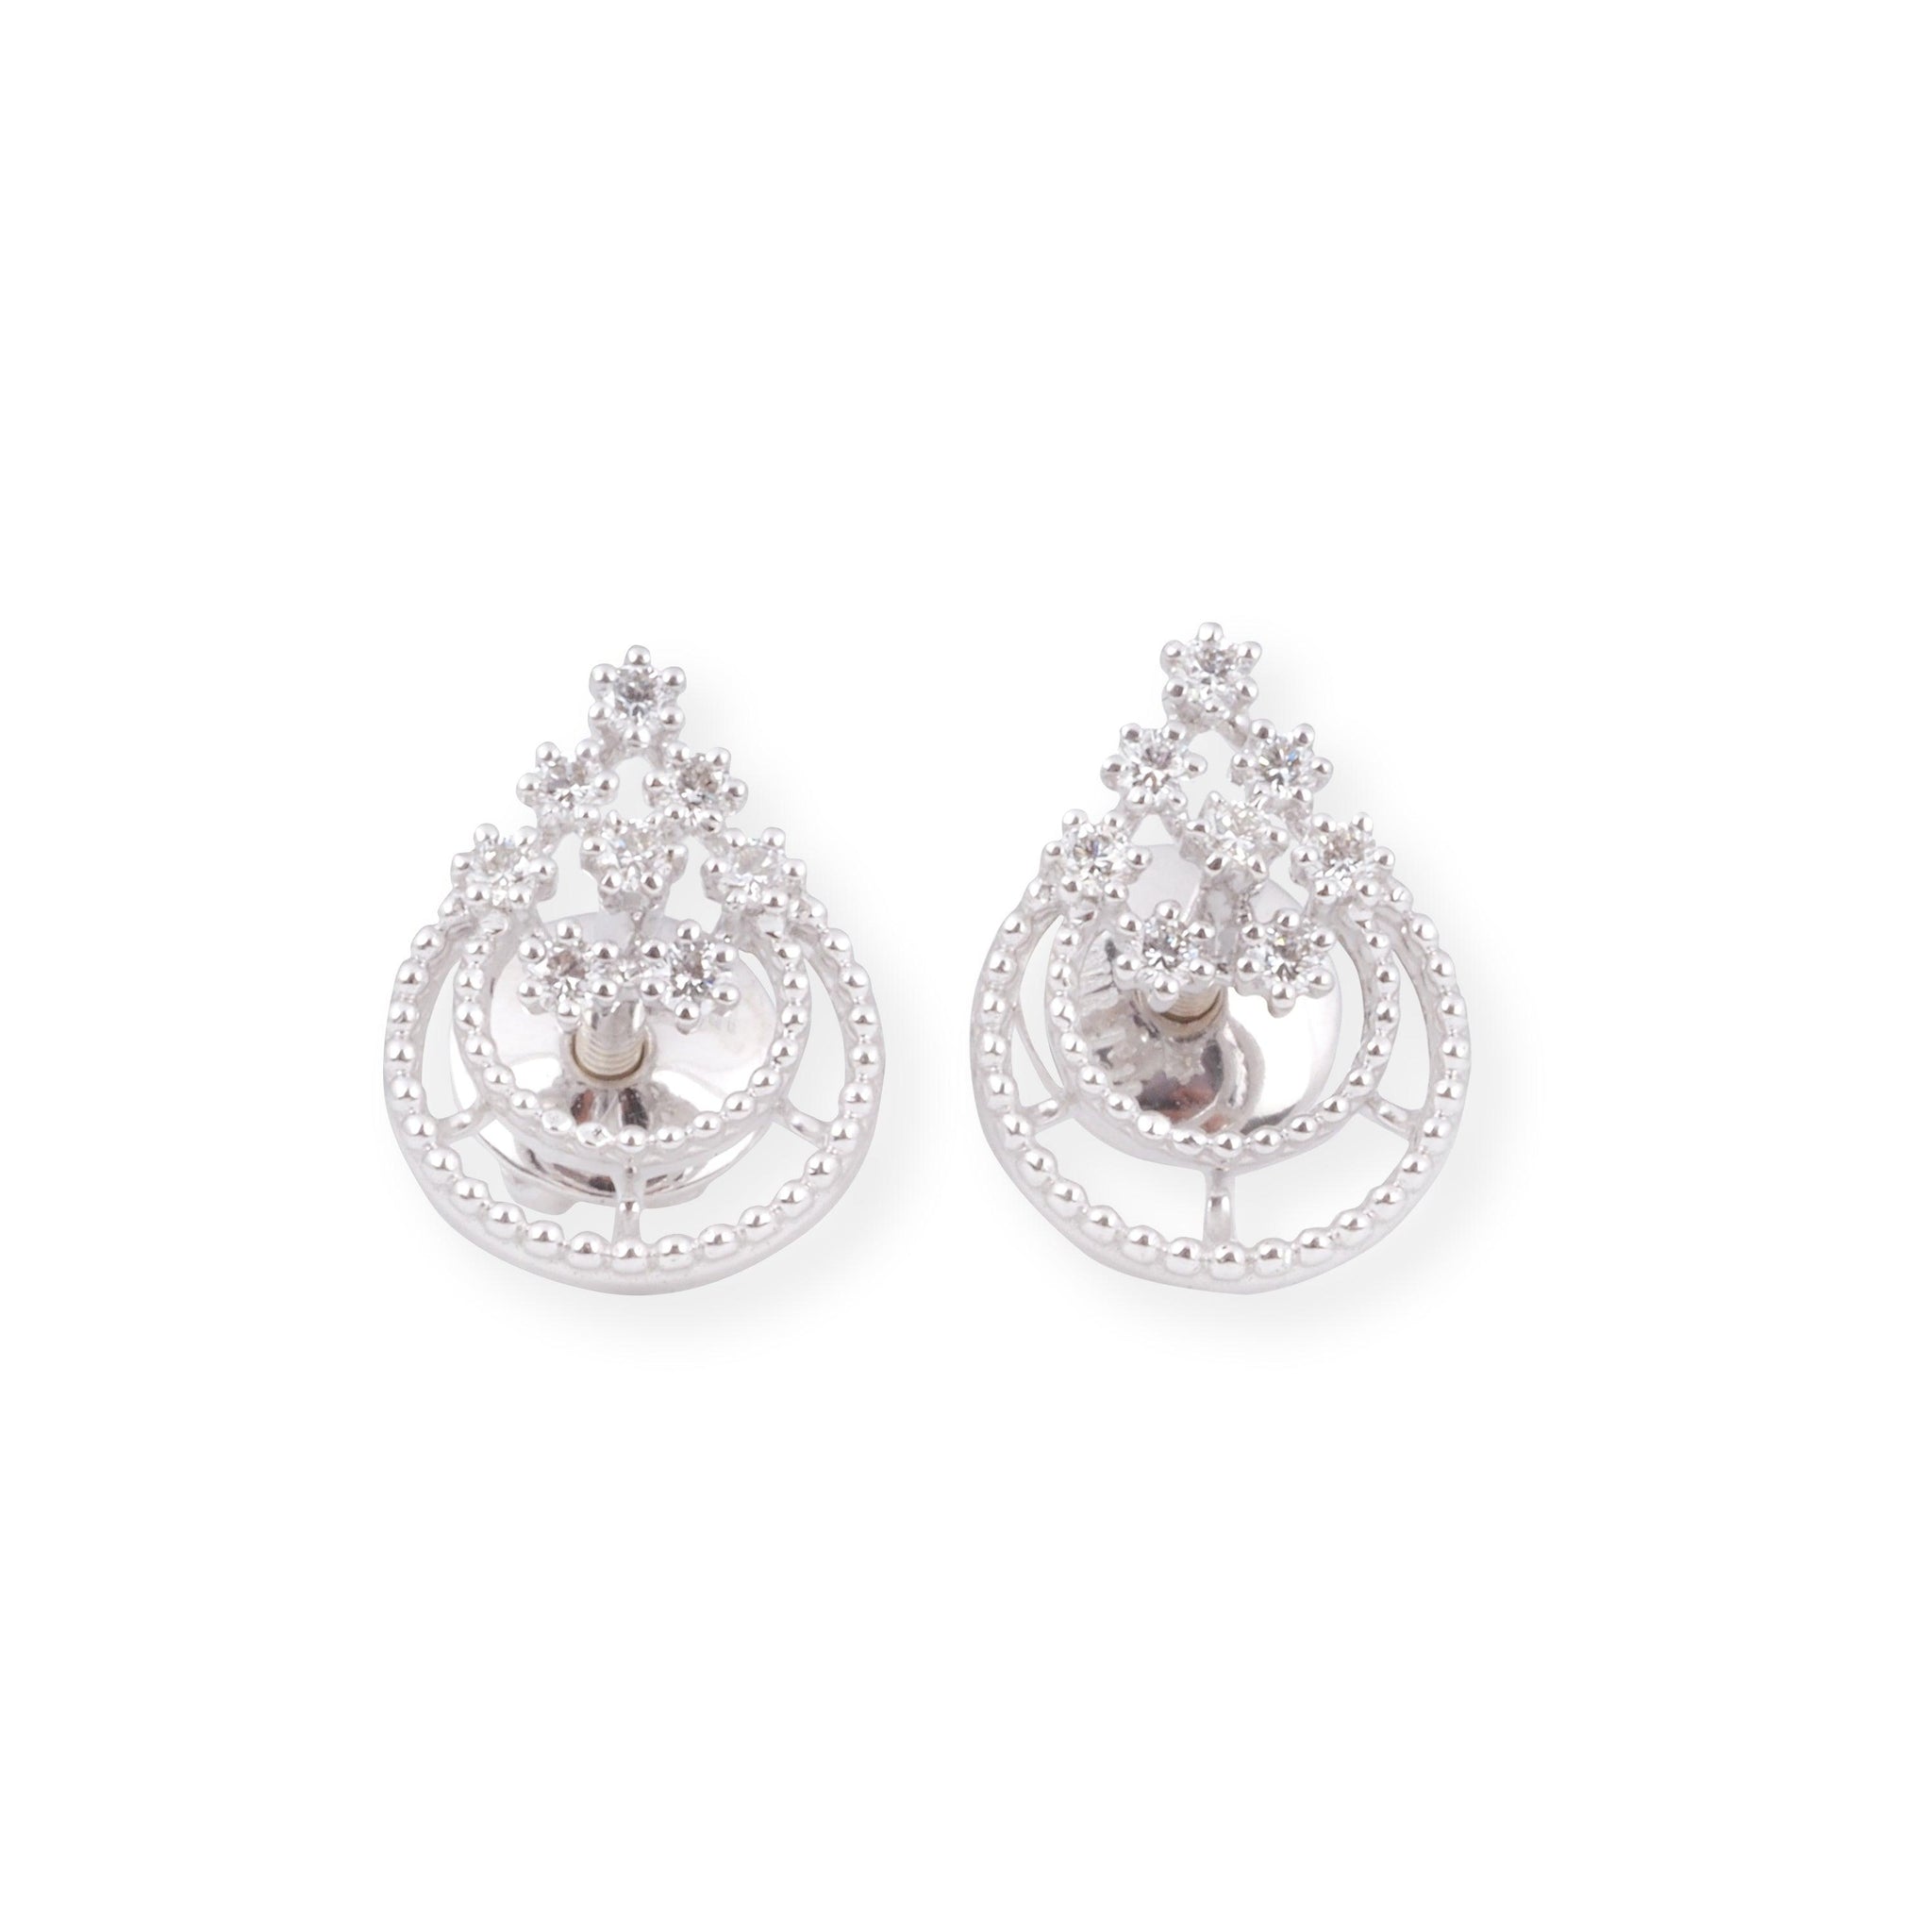 18ct White Gold Diamond Set (Pendant + Chain + Earrings) MCS4676/7